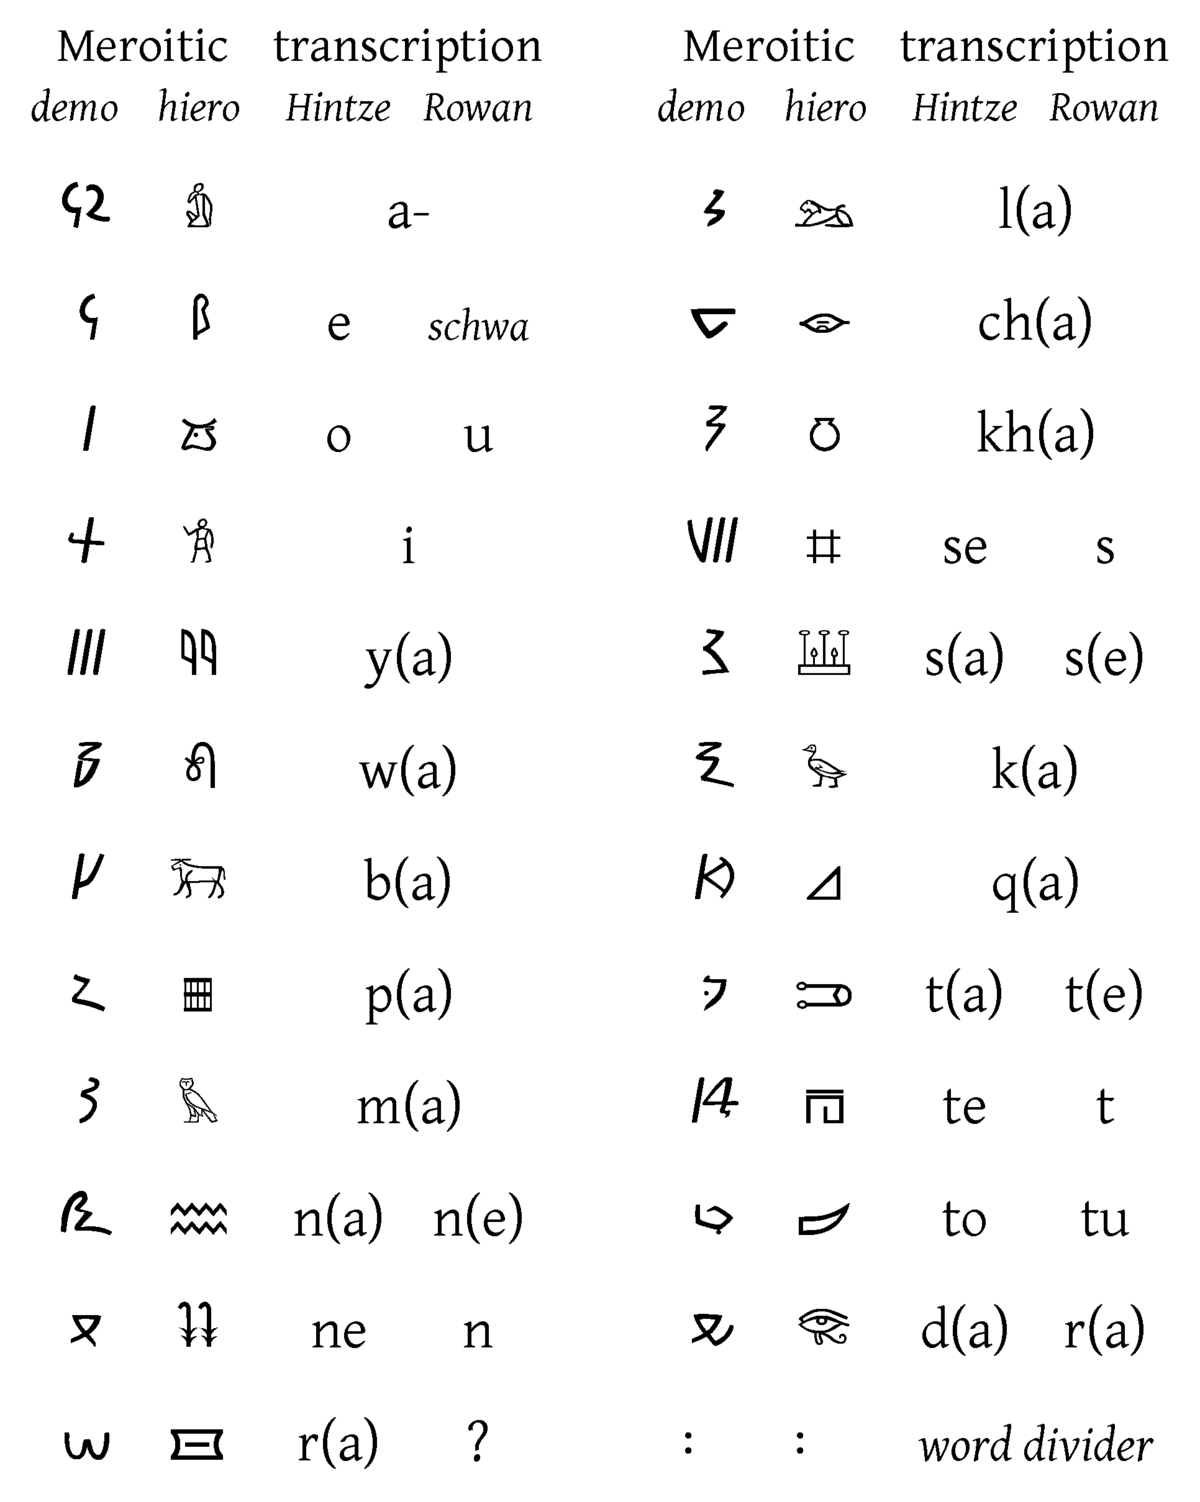 Meroitic alphabet - Wikipedia